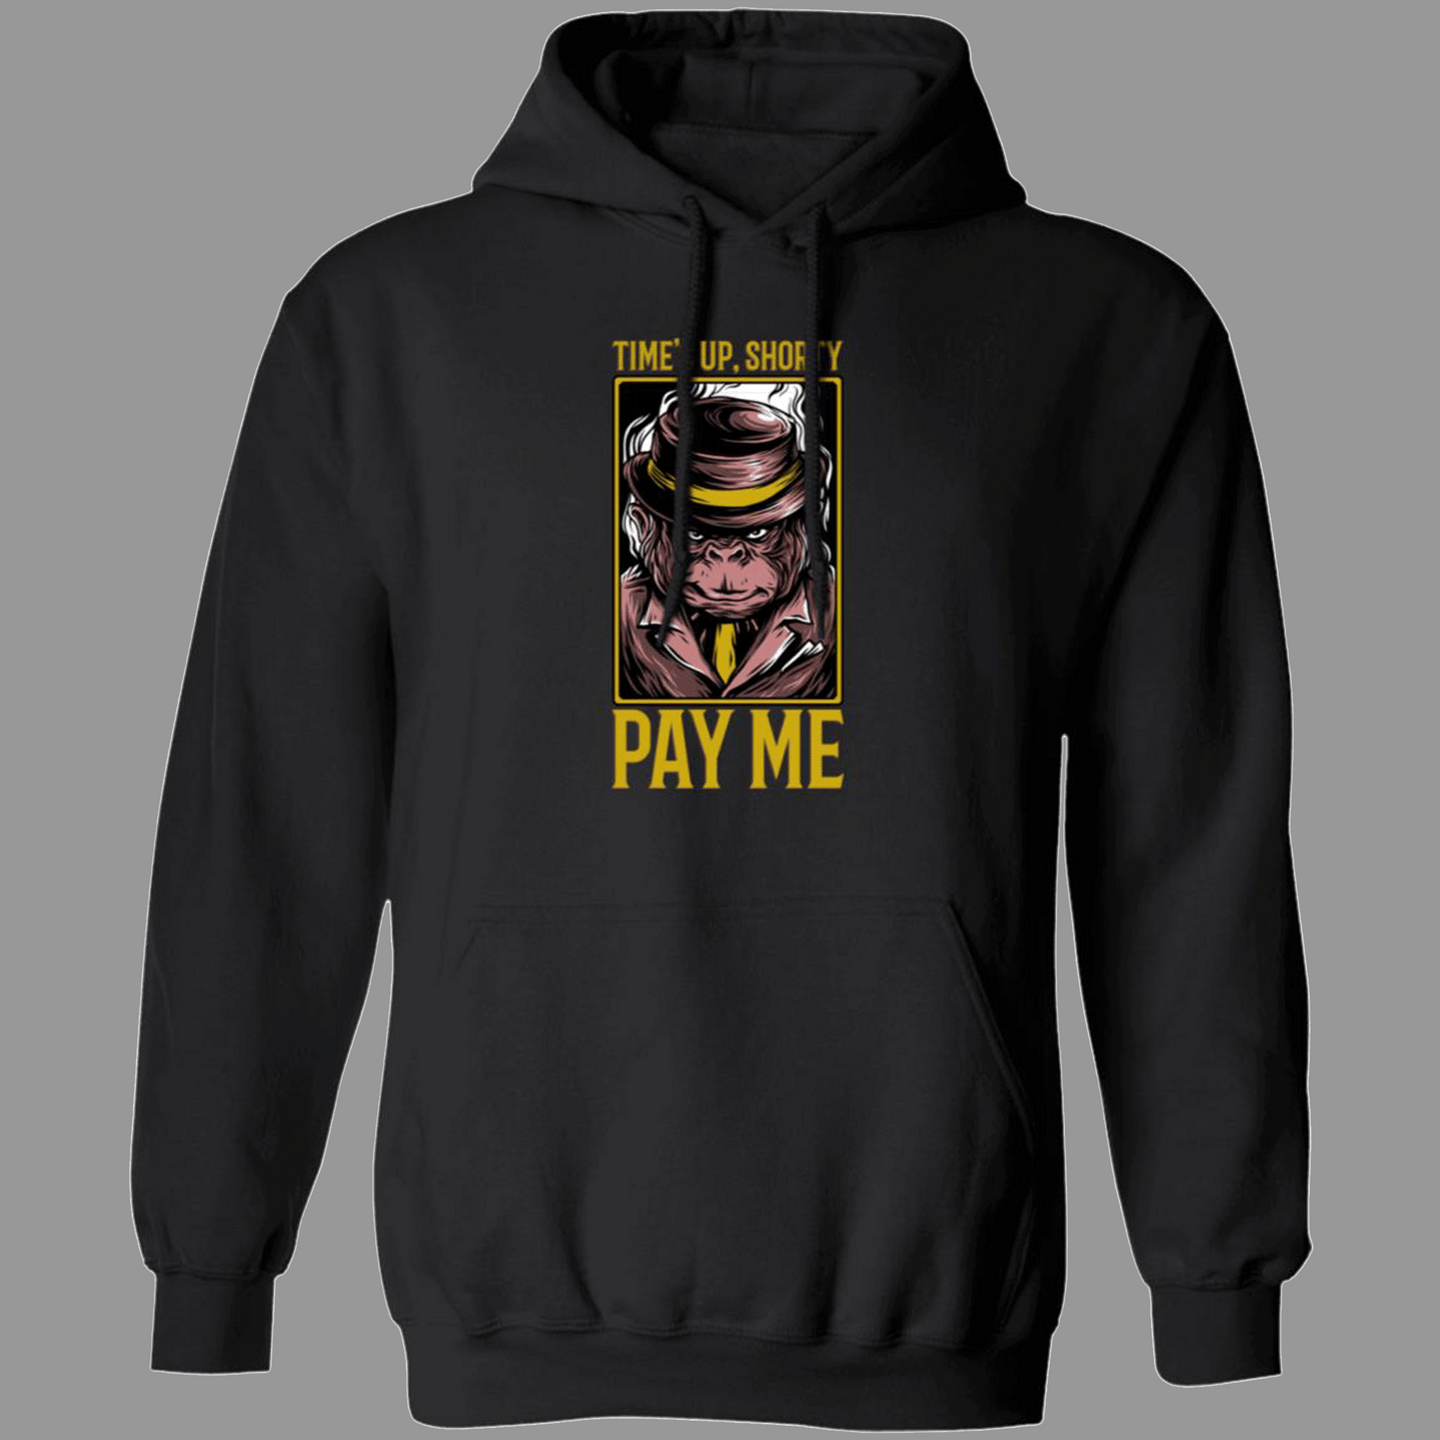 Pay Me - Pullover Hoodies & Sweatshirts